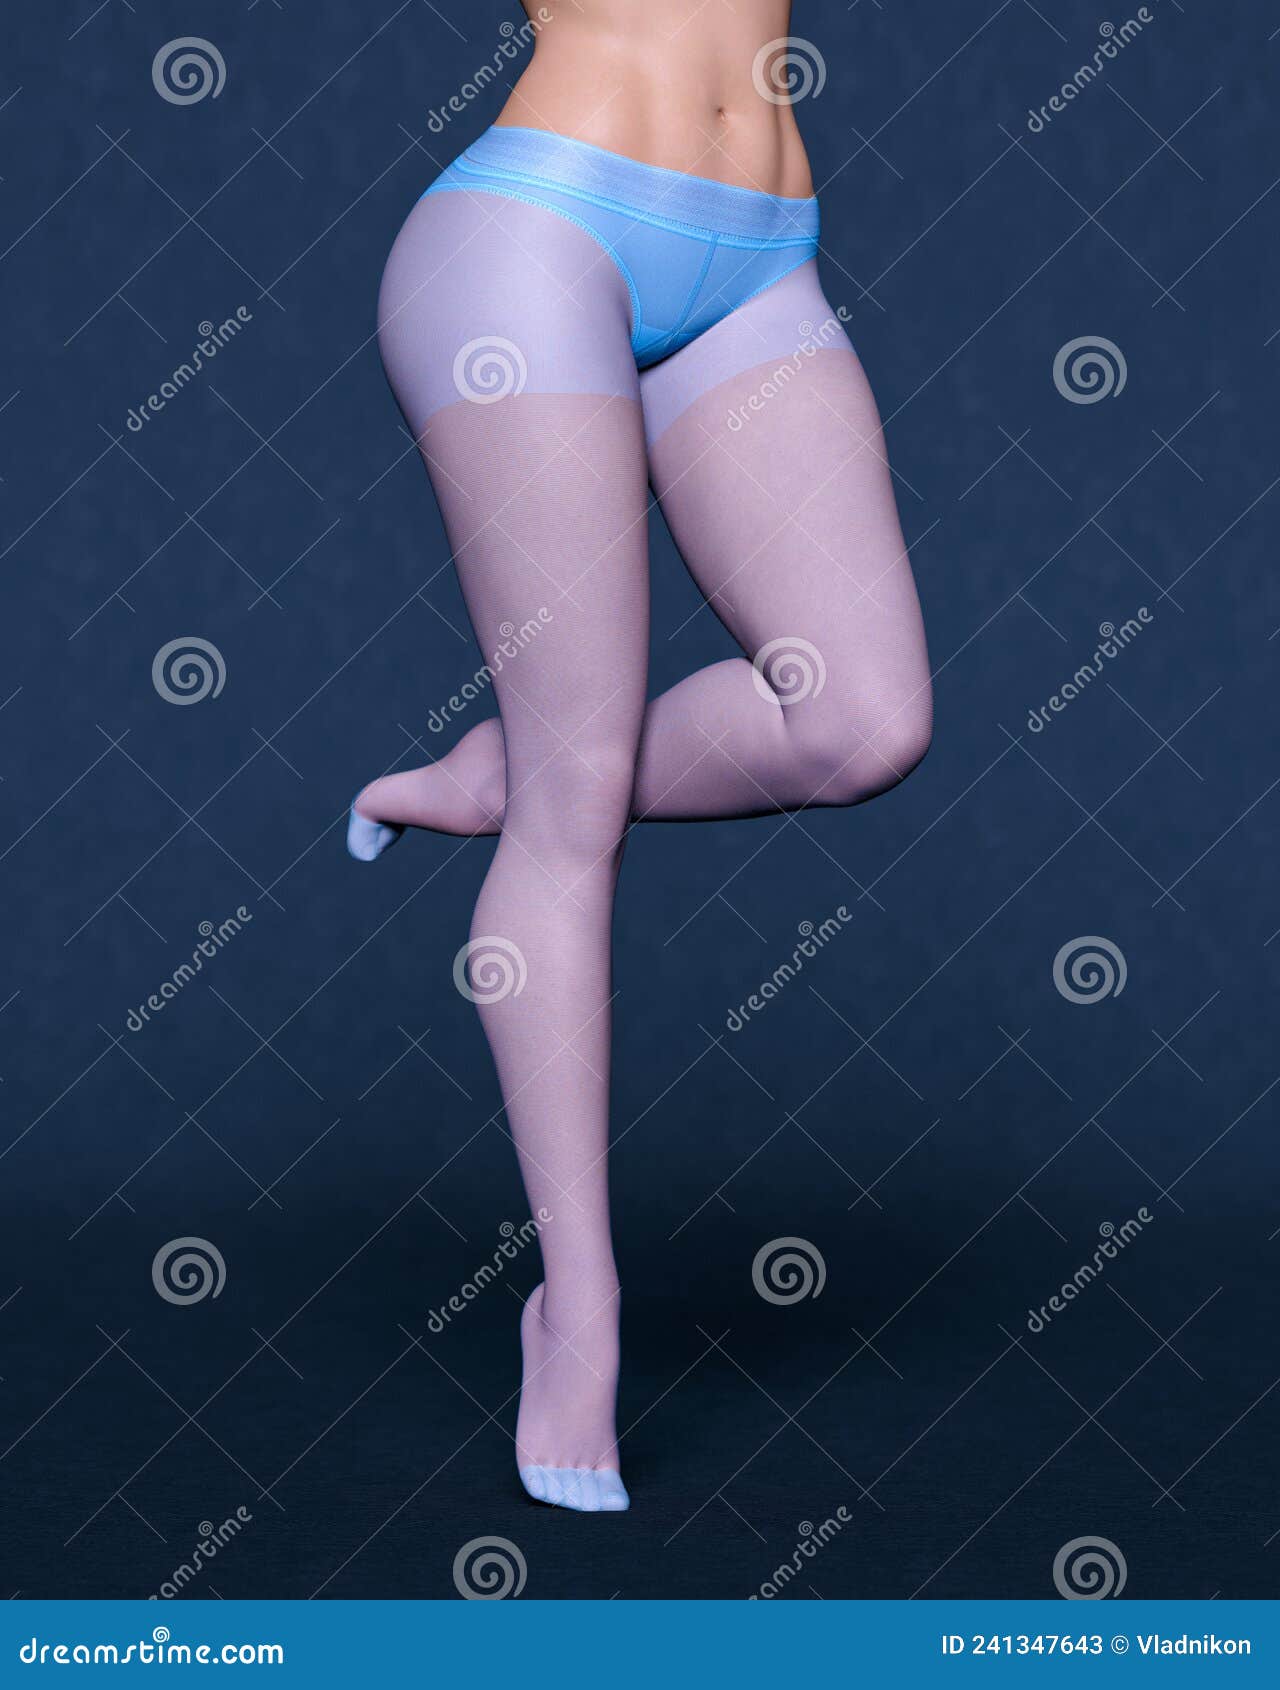 https://thumbs.dreamstime.com/z/d-beautiful-female-legs-blue-pantyhose-panties-dark-background-woman-studio-photography-high-heel-conceptual-fashion-art-241347643.jpg